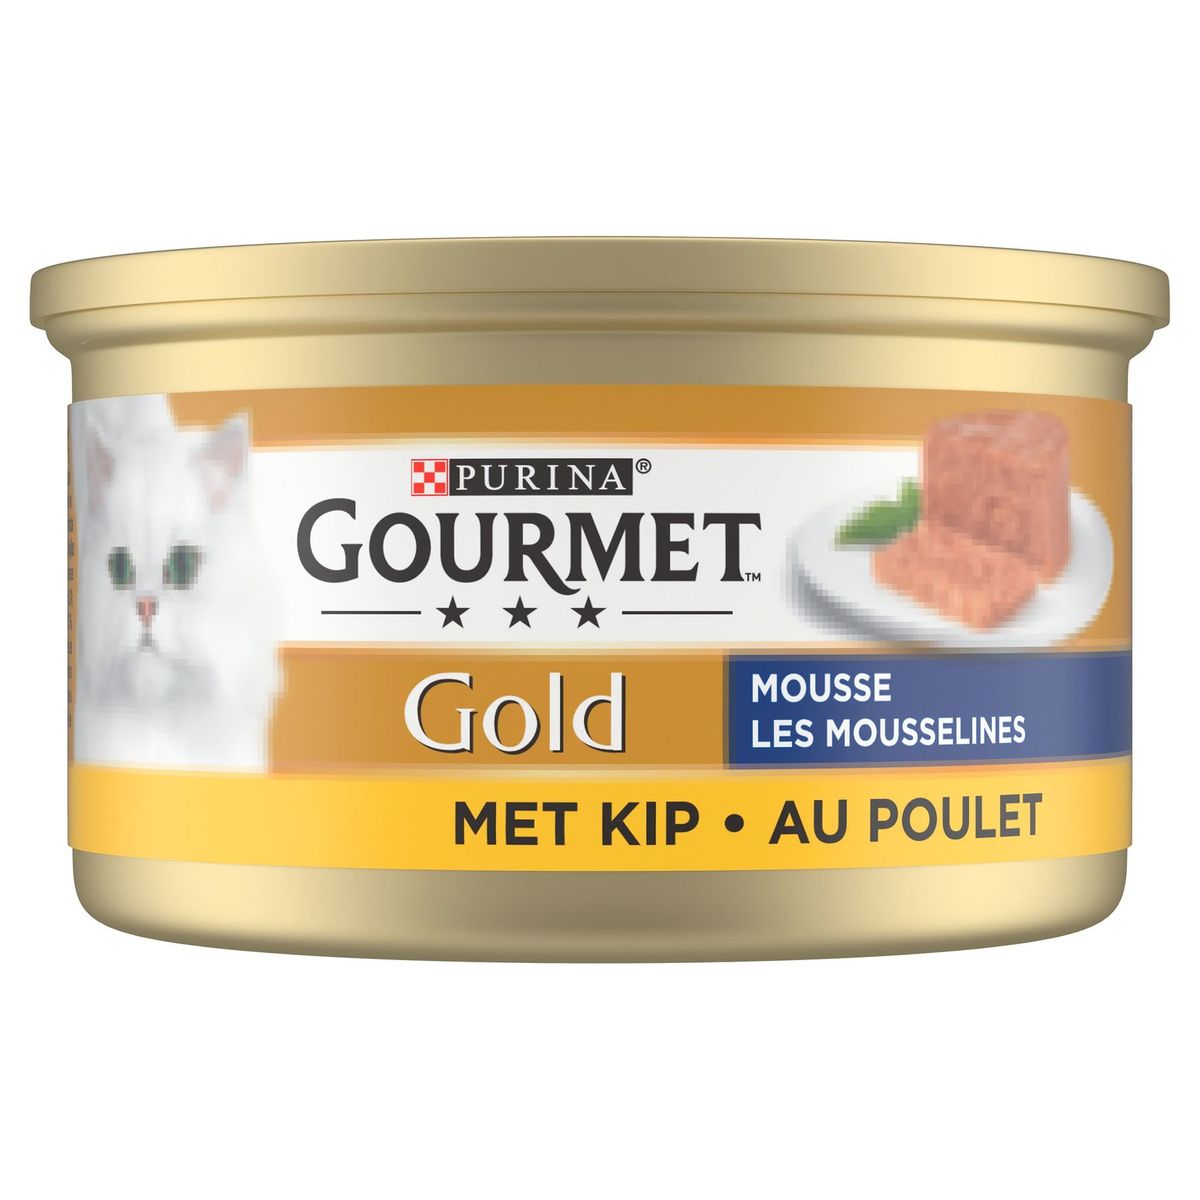 Gourmet Gold Mousse met Kip 85 g